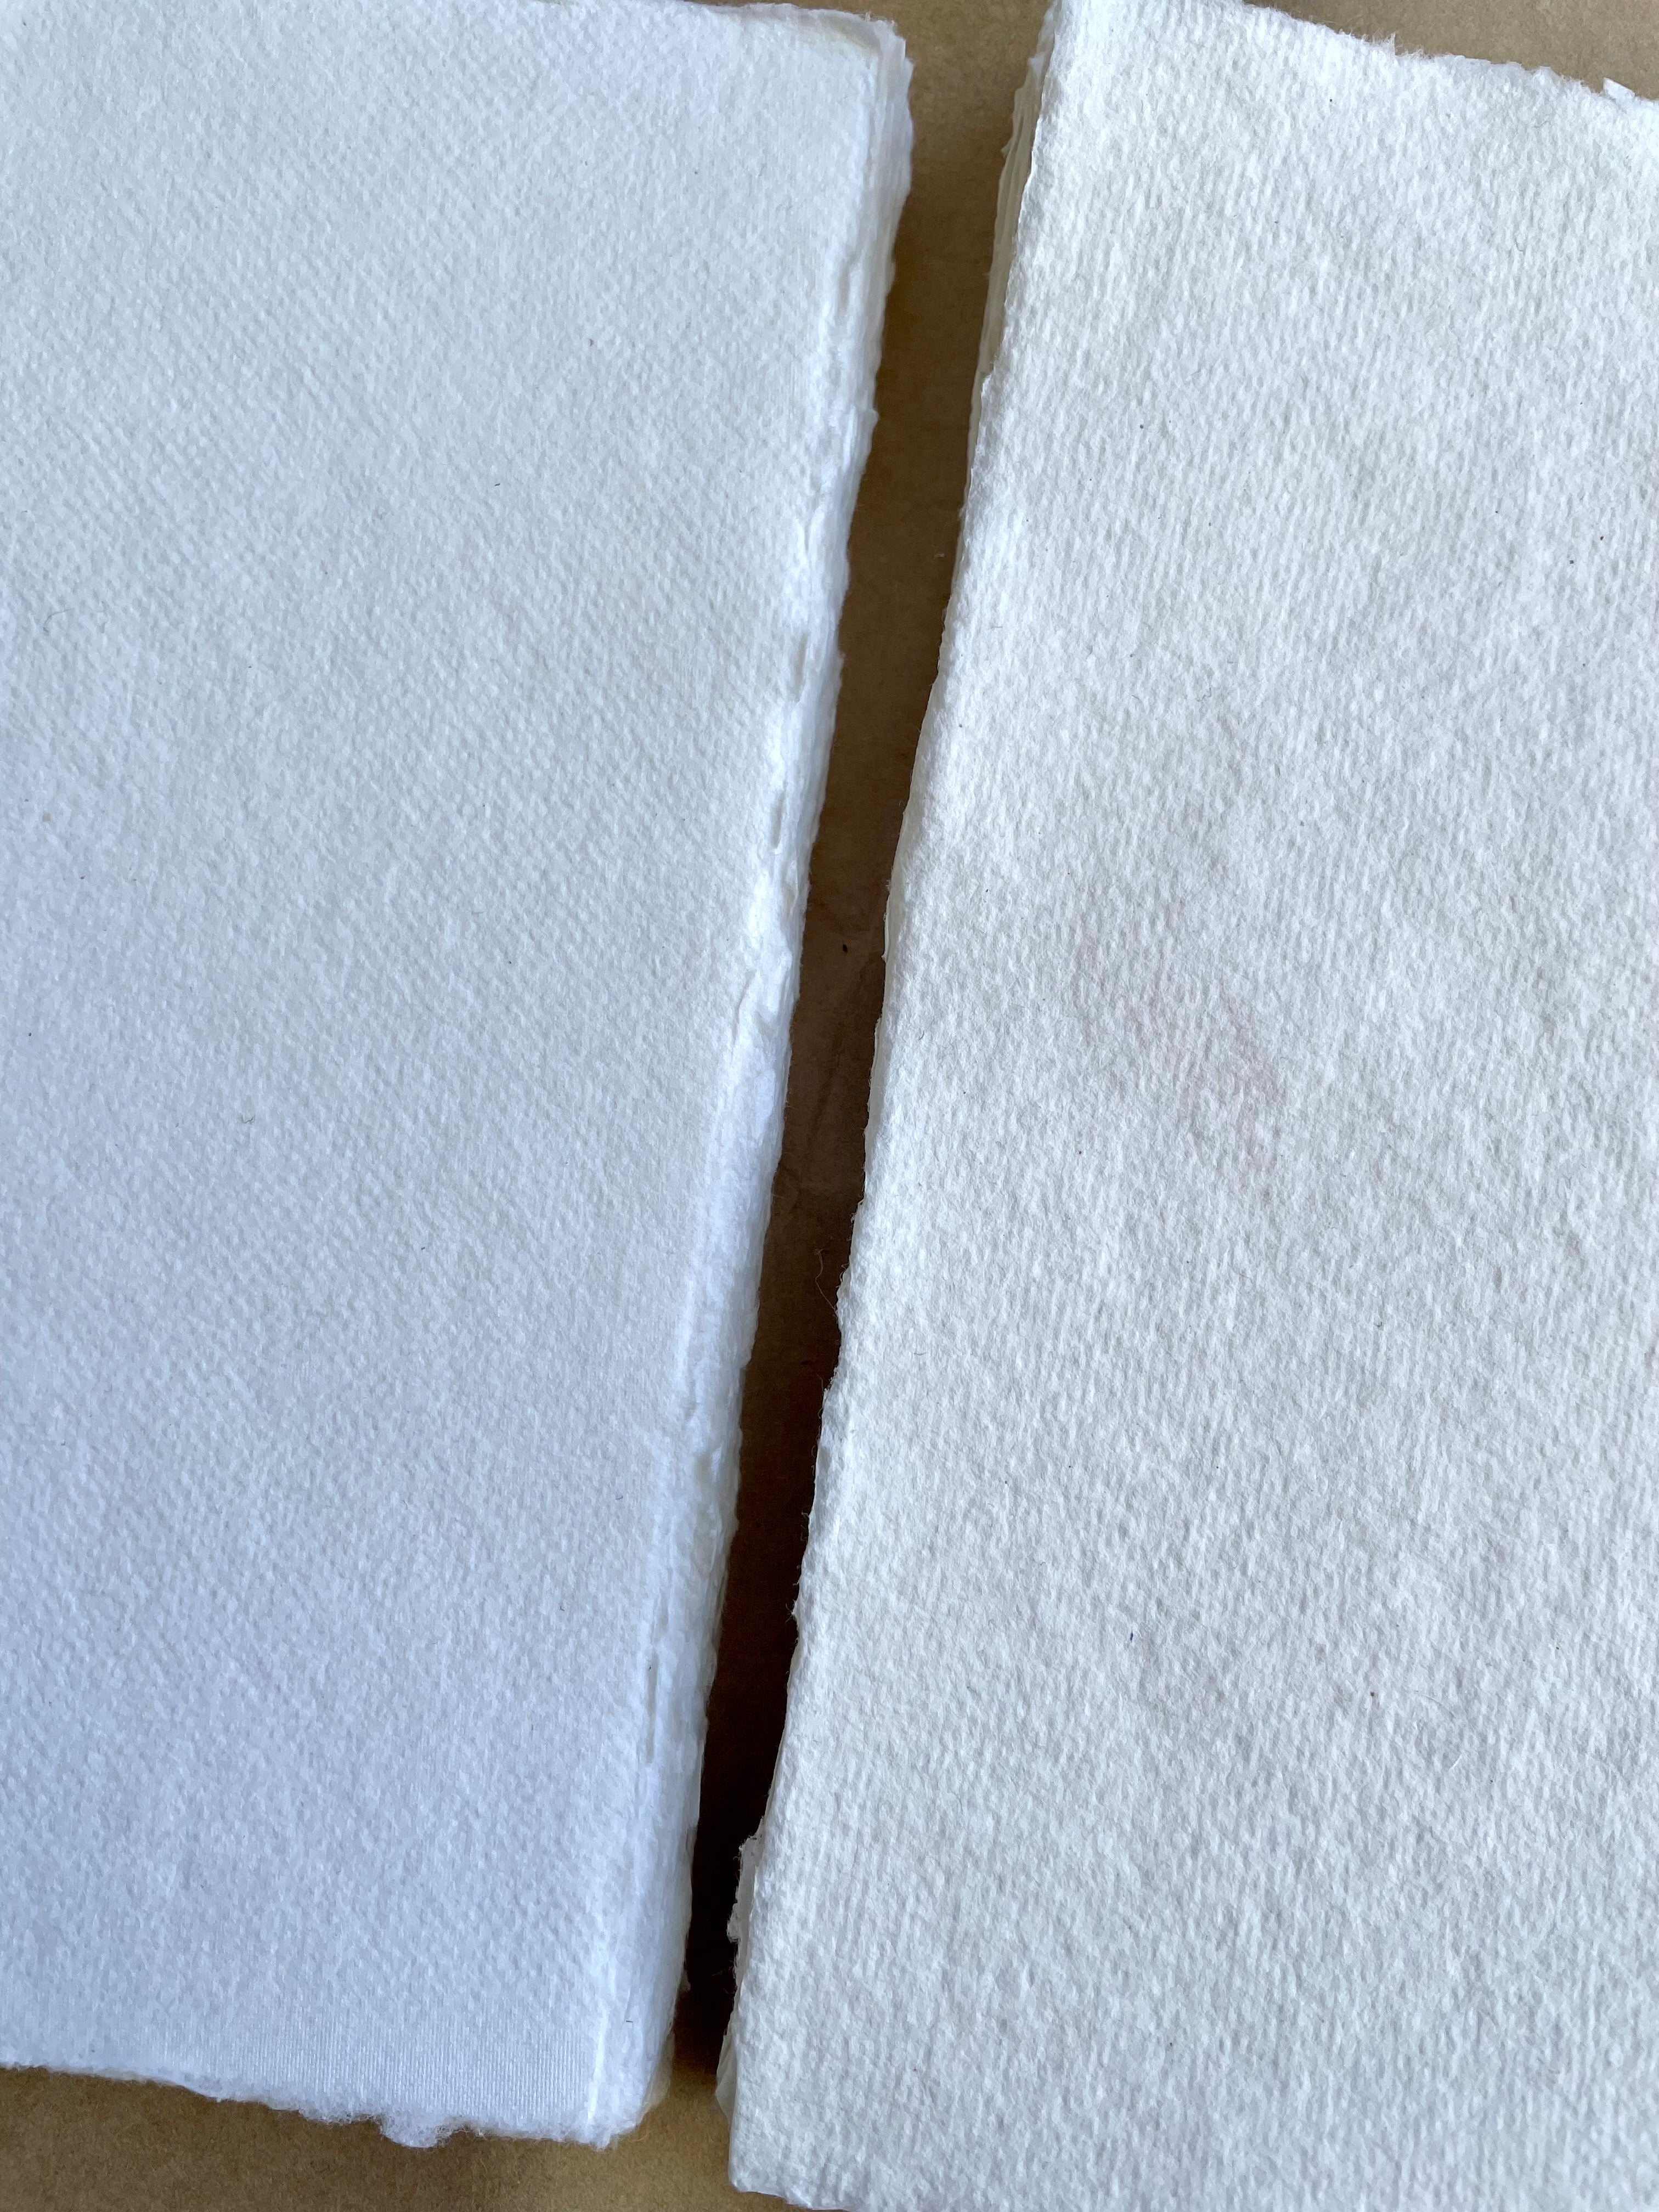 BLEMISHED deckle edge handmade cotton rag paper